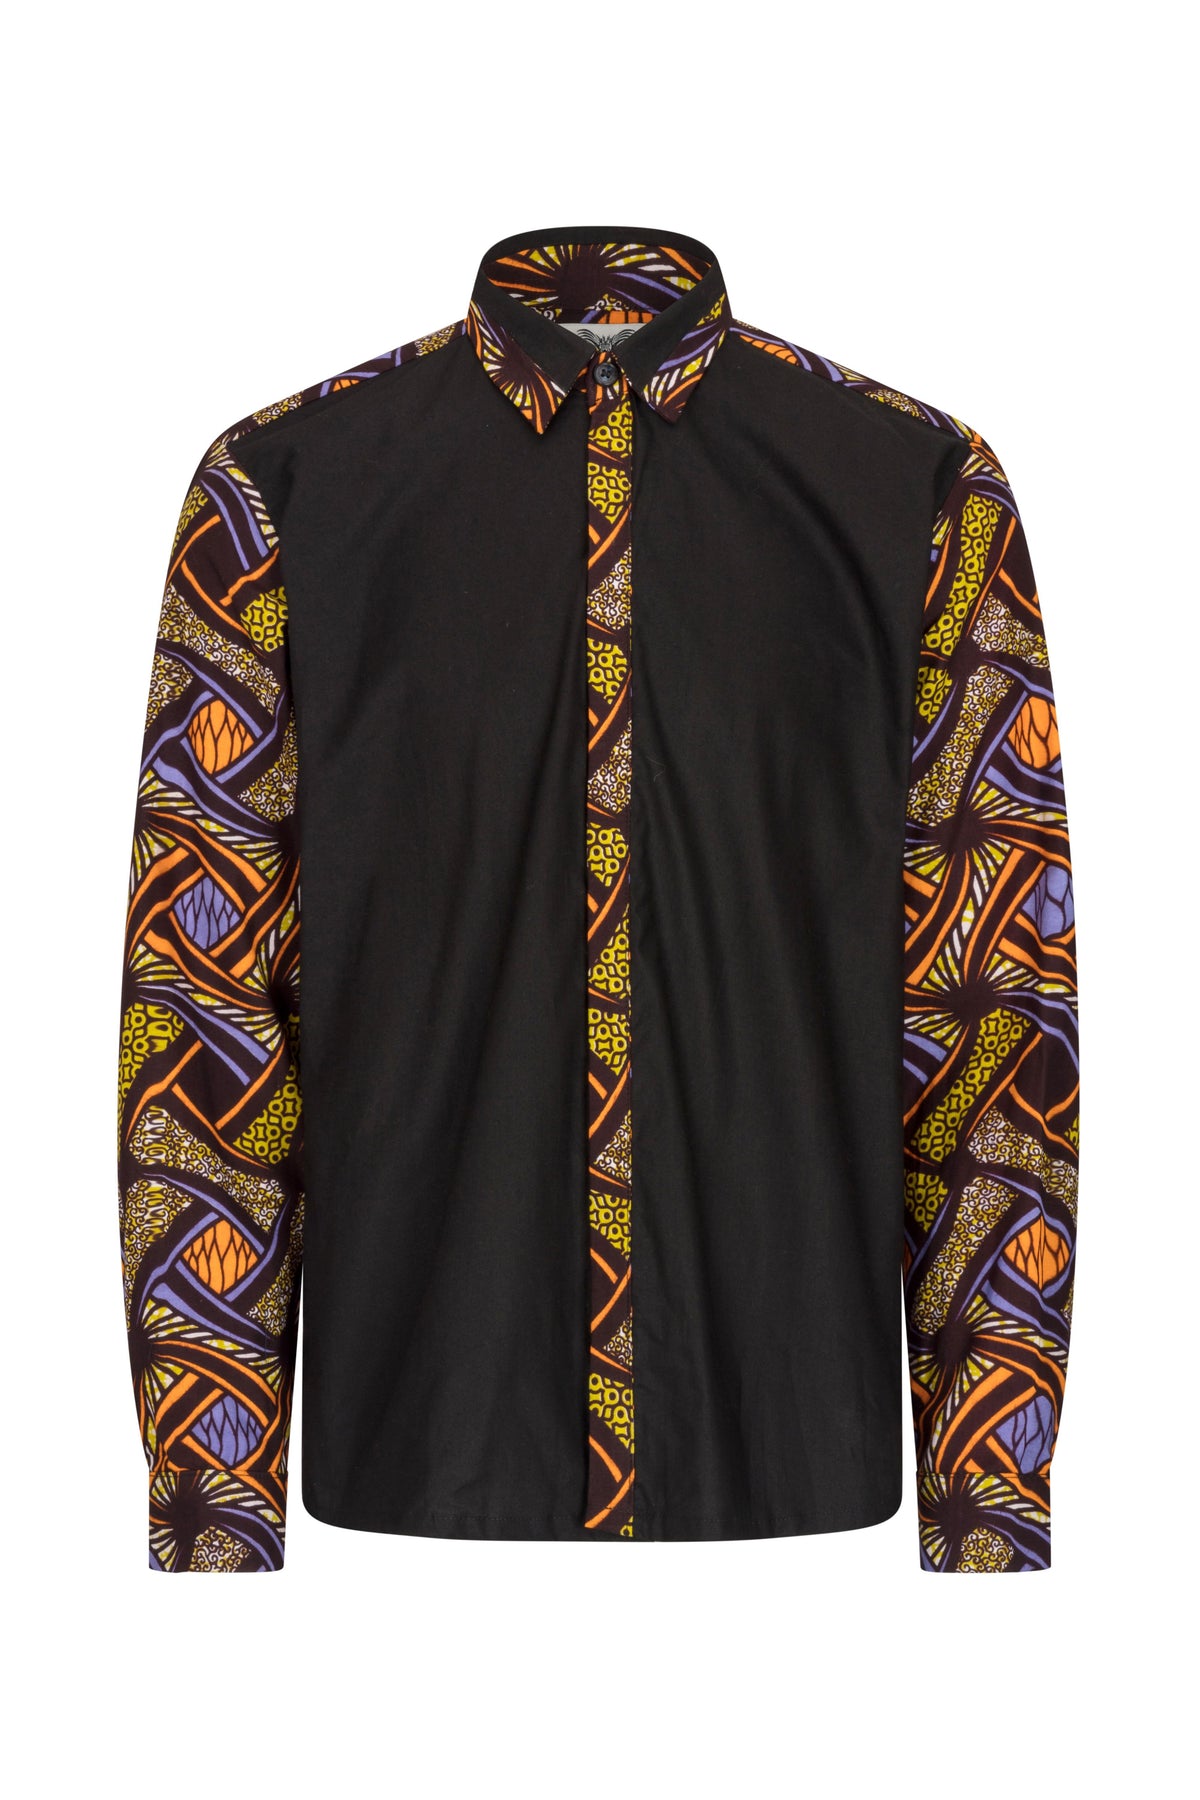 Men's black African print shirt